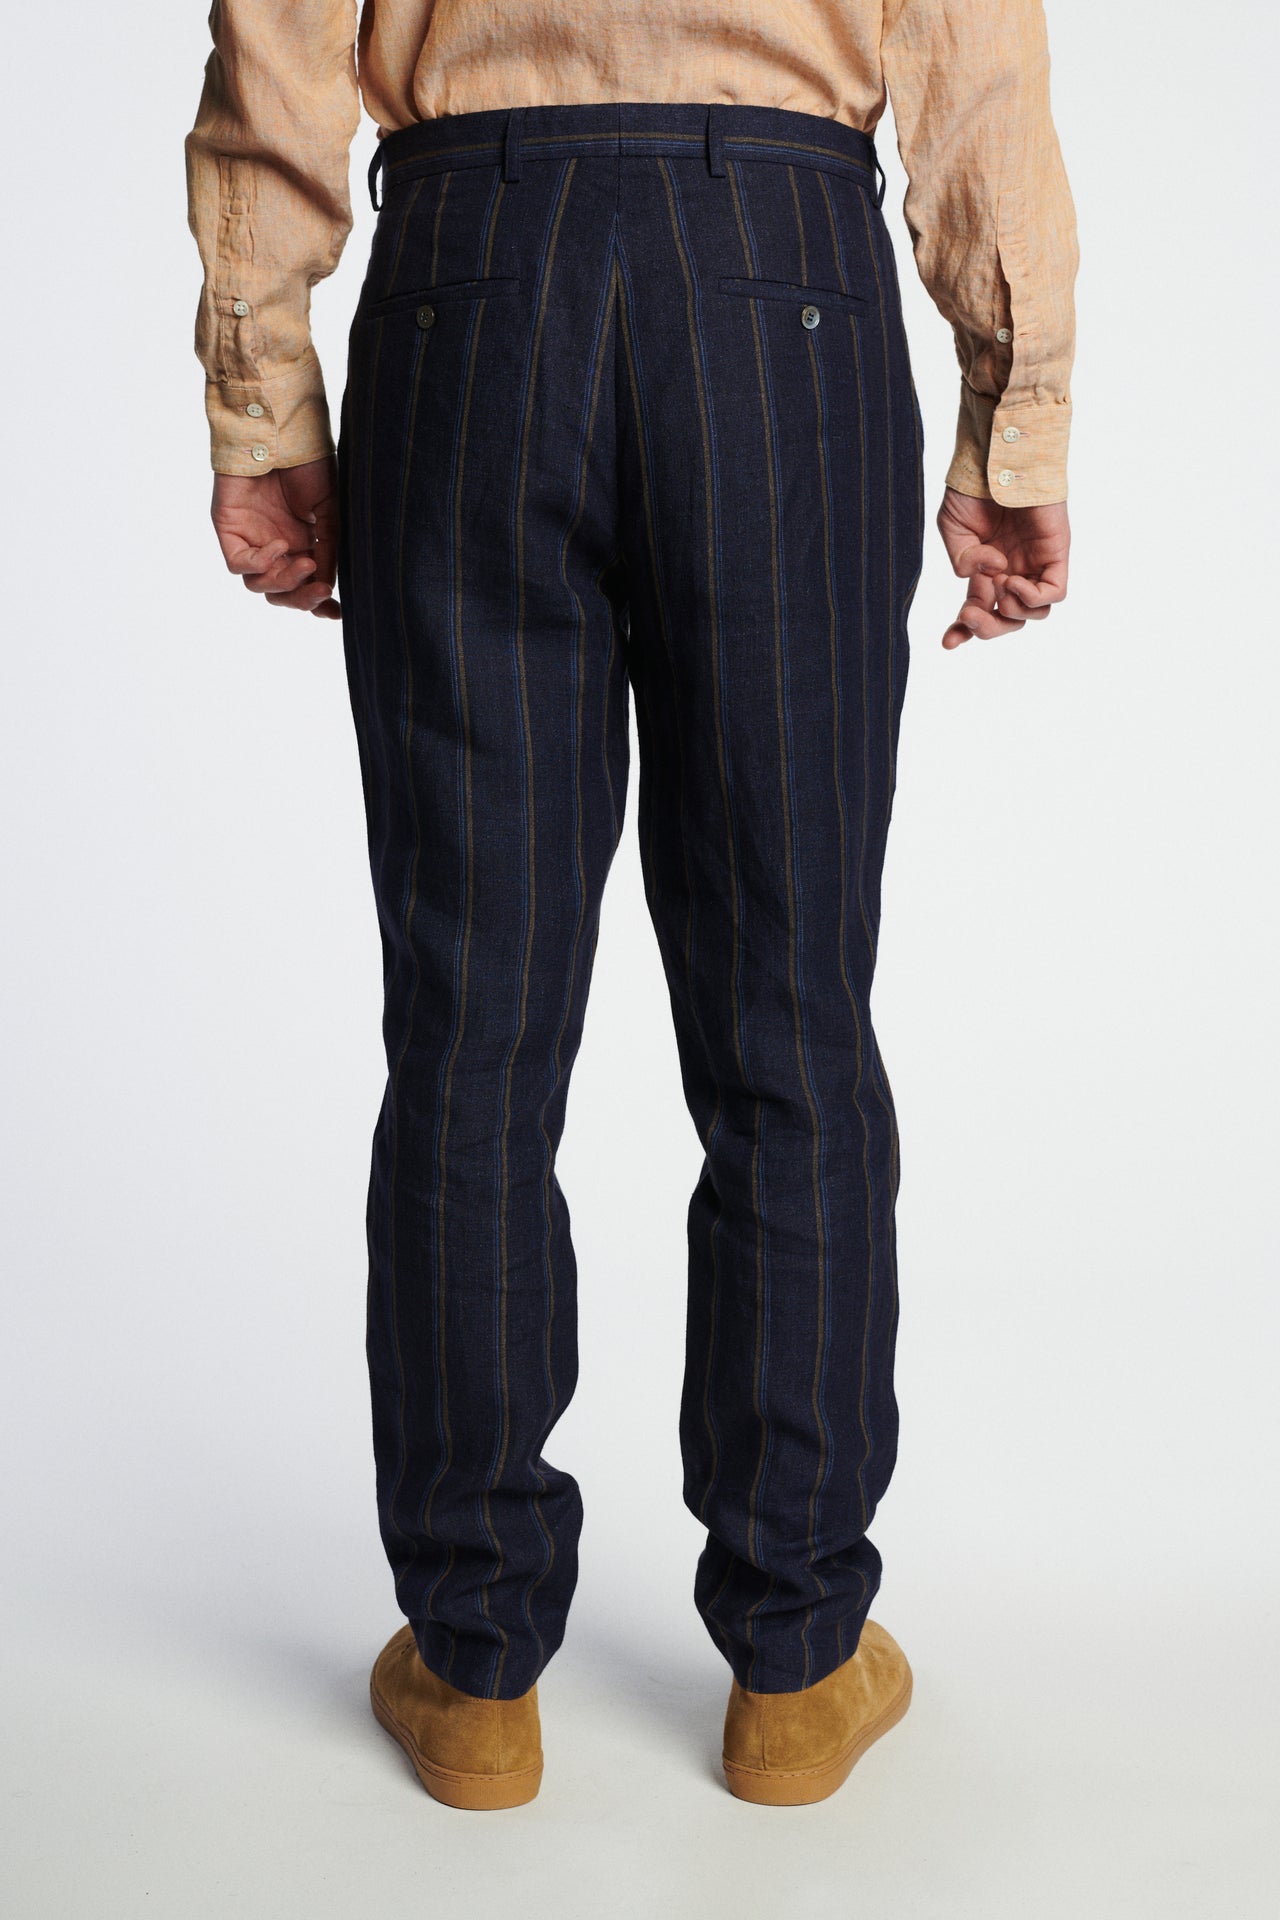 Bohemian trousers in a Navy and Tonal Brown Blue Stripe Italian Linen